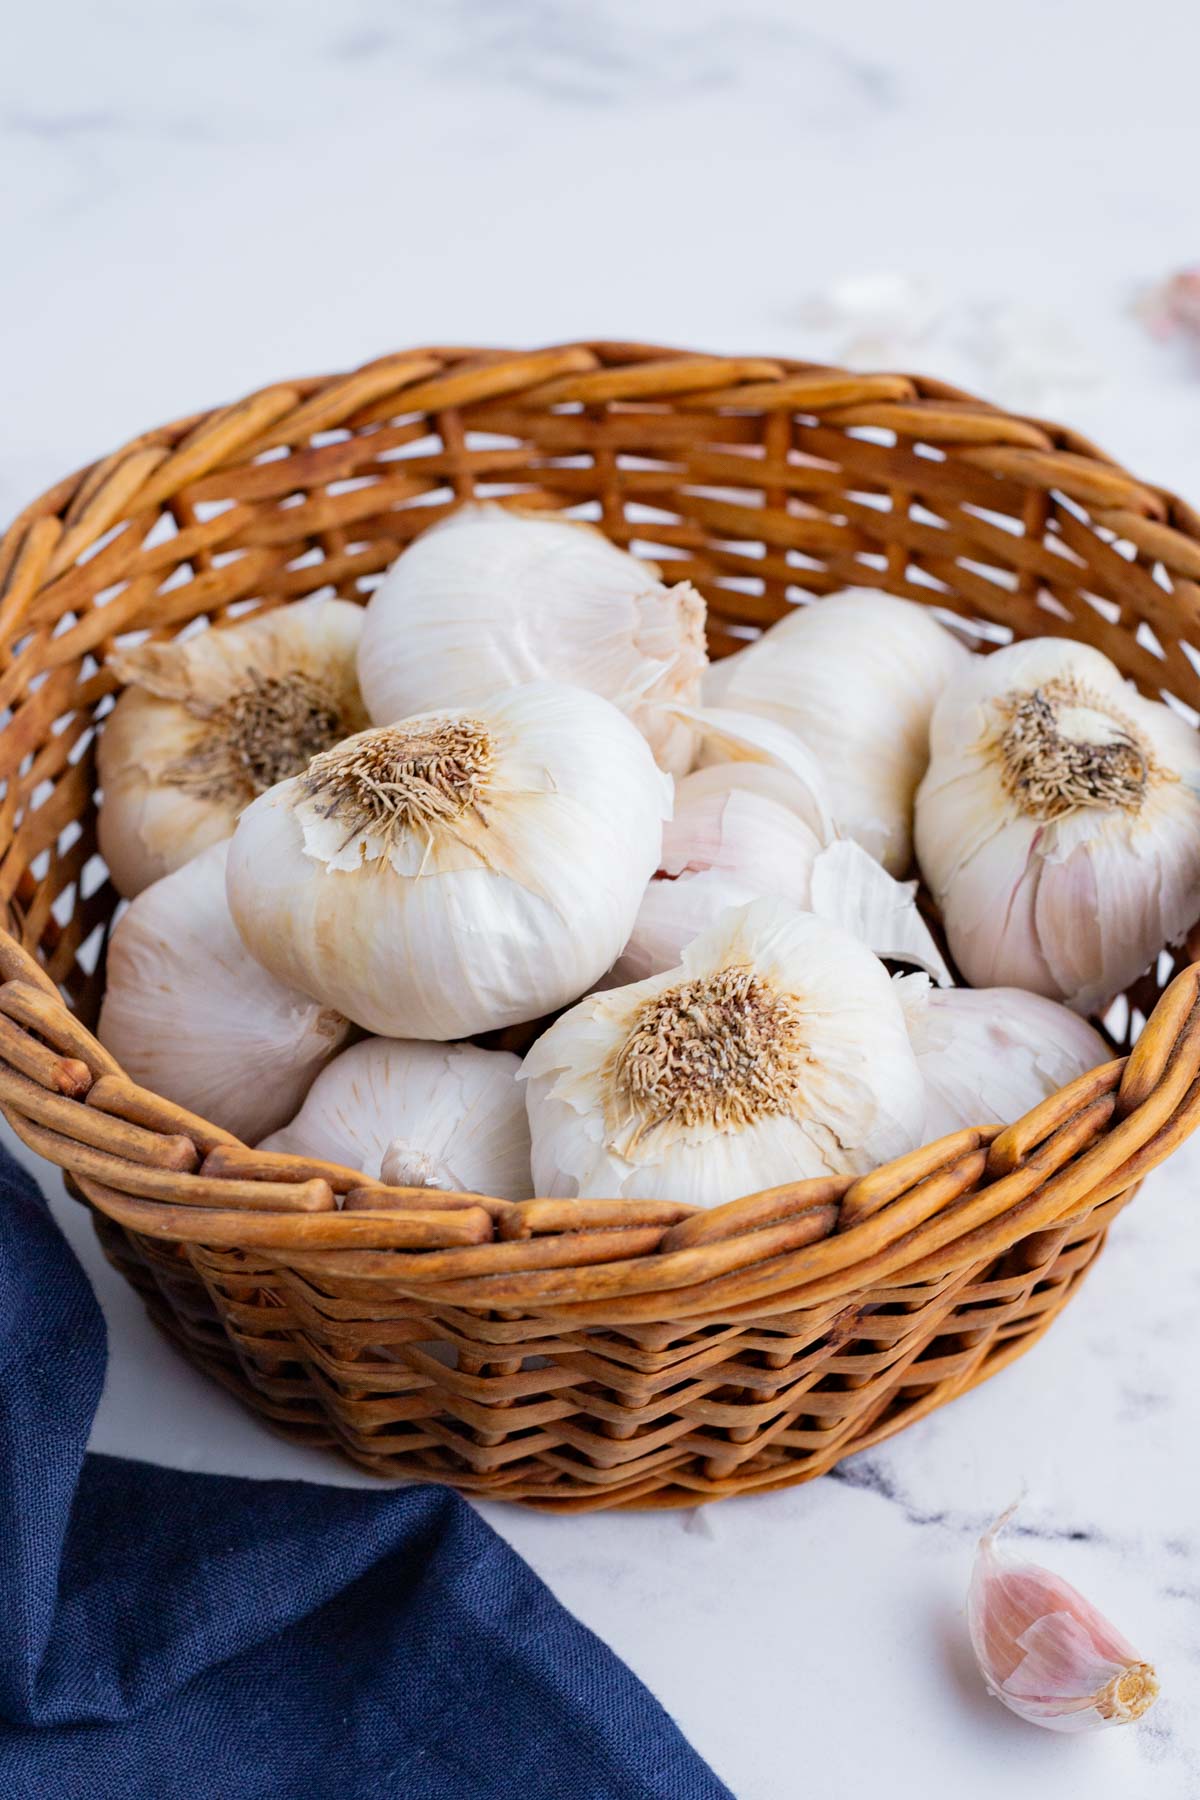 Multiple heads of garlic in a basket.